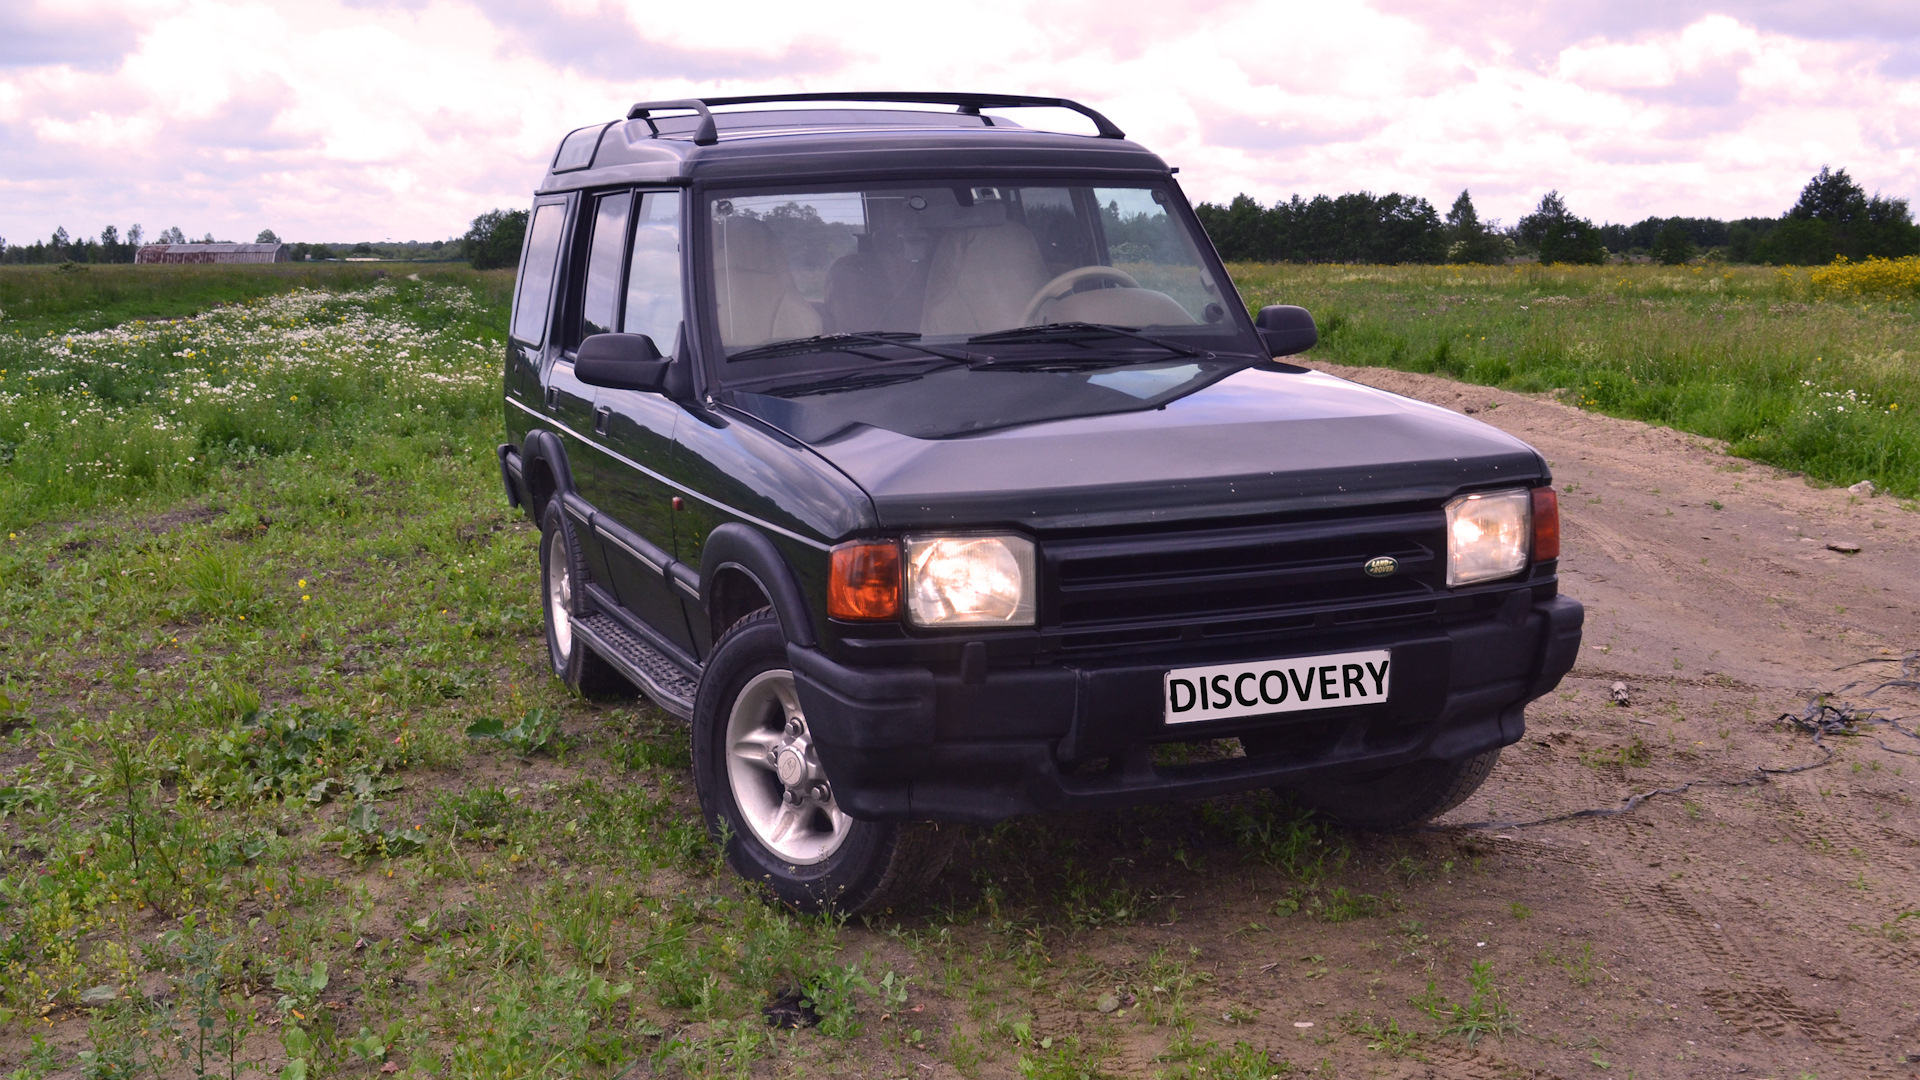 Дискавери 2.5 дизель. Land Rover Discovery 1996. Ленд Ровер 1996. Land Rover Discovery 1996 2.5 дизель. Range Rover Discovery 1996.